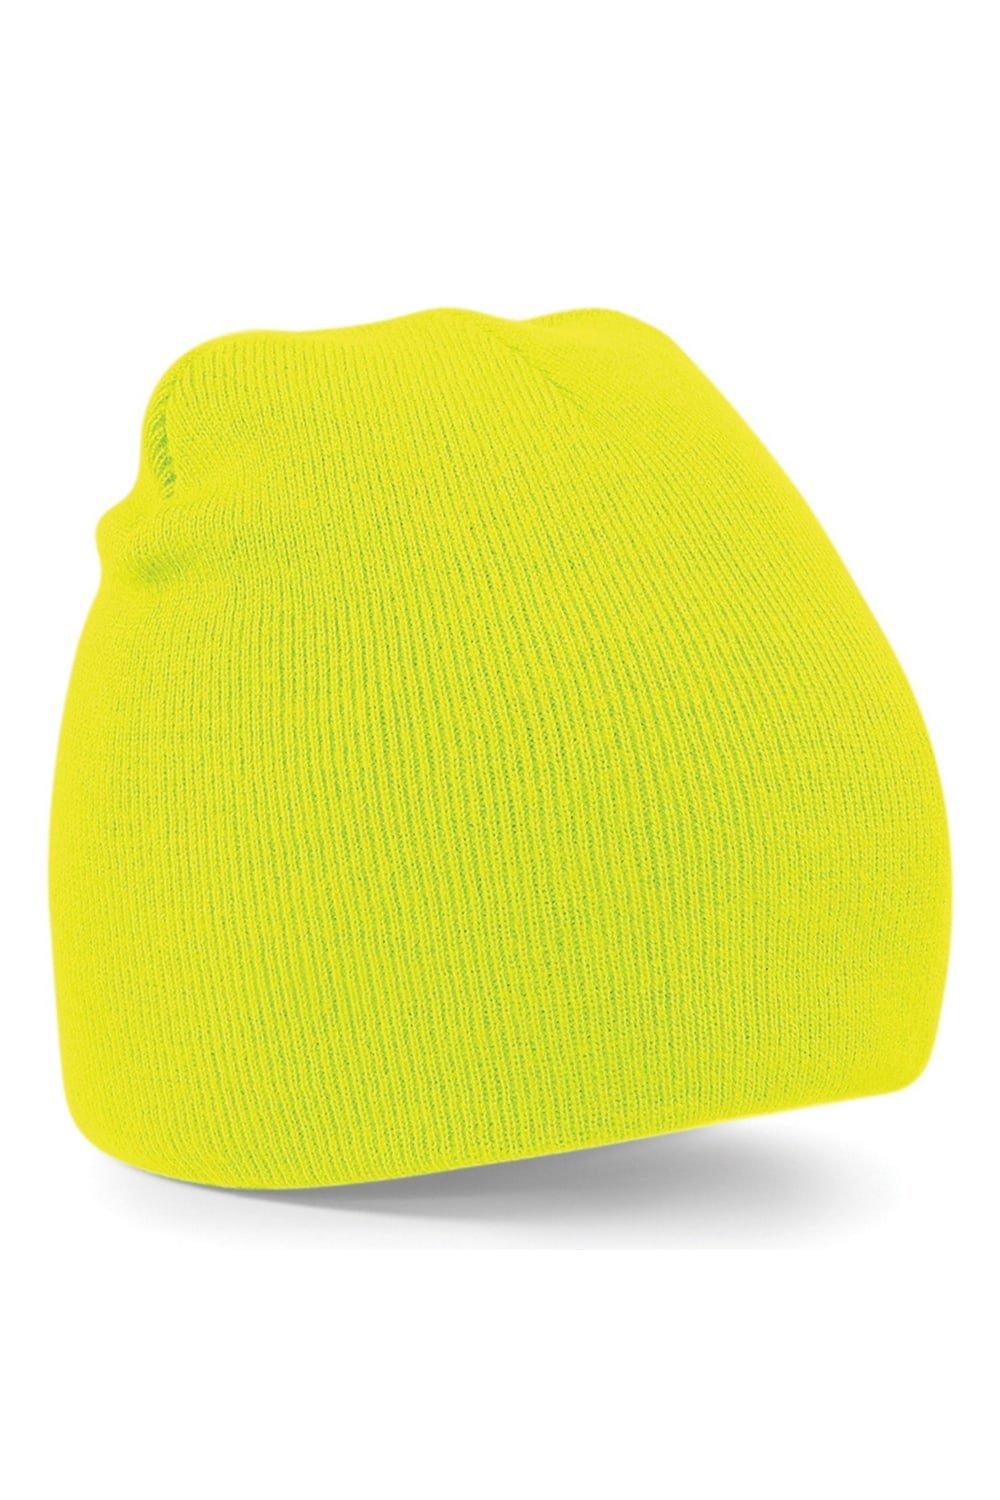 Простая базовая вязаная зимняя шапка-бини Beechfield, желтый